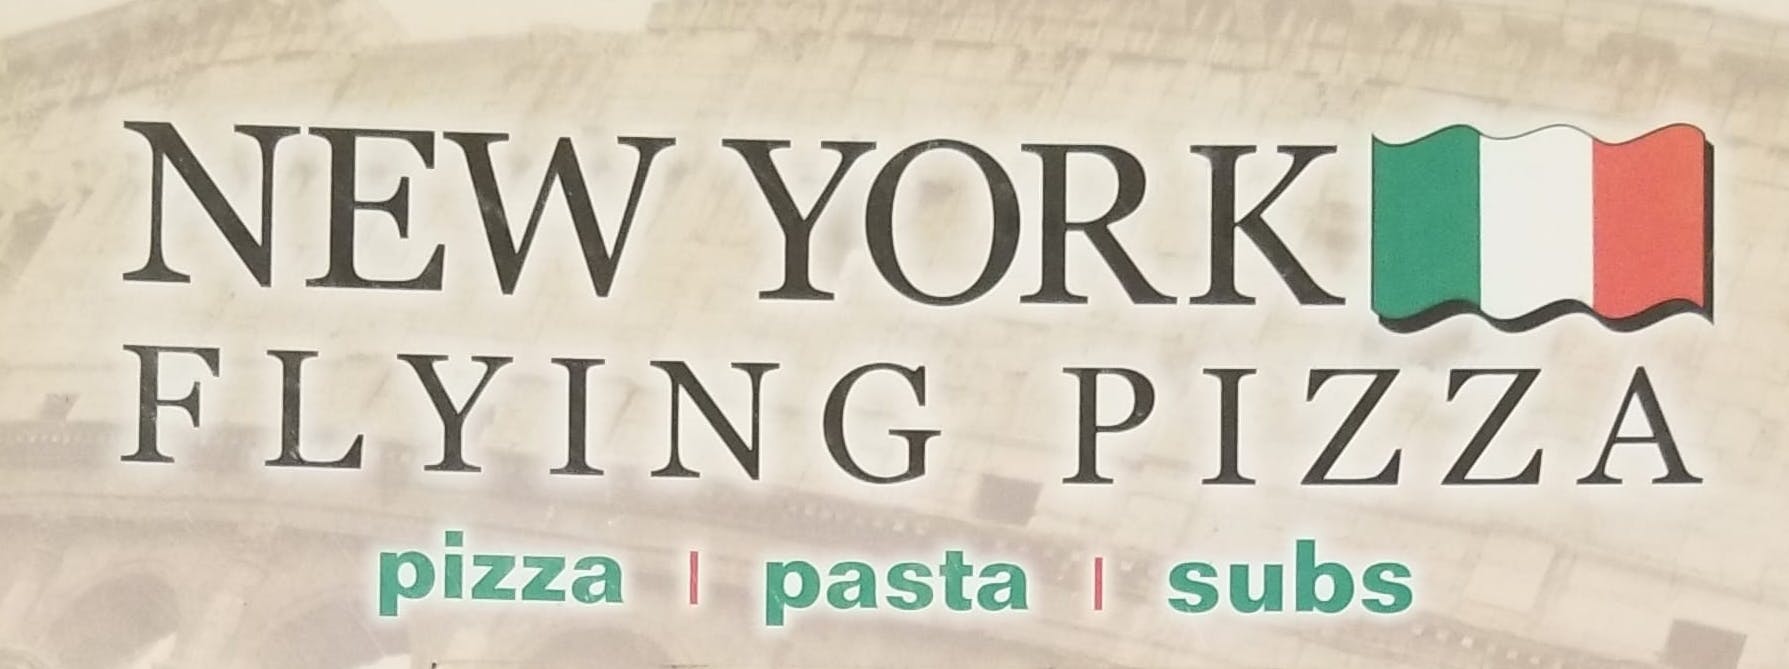 New York Flying Pizza Logo